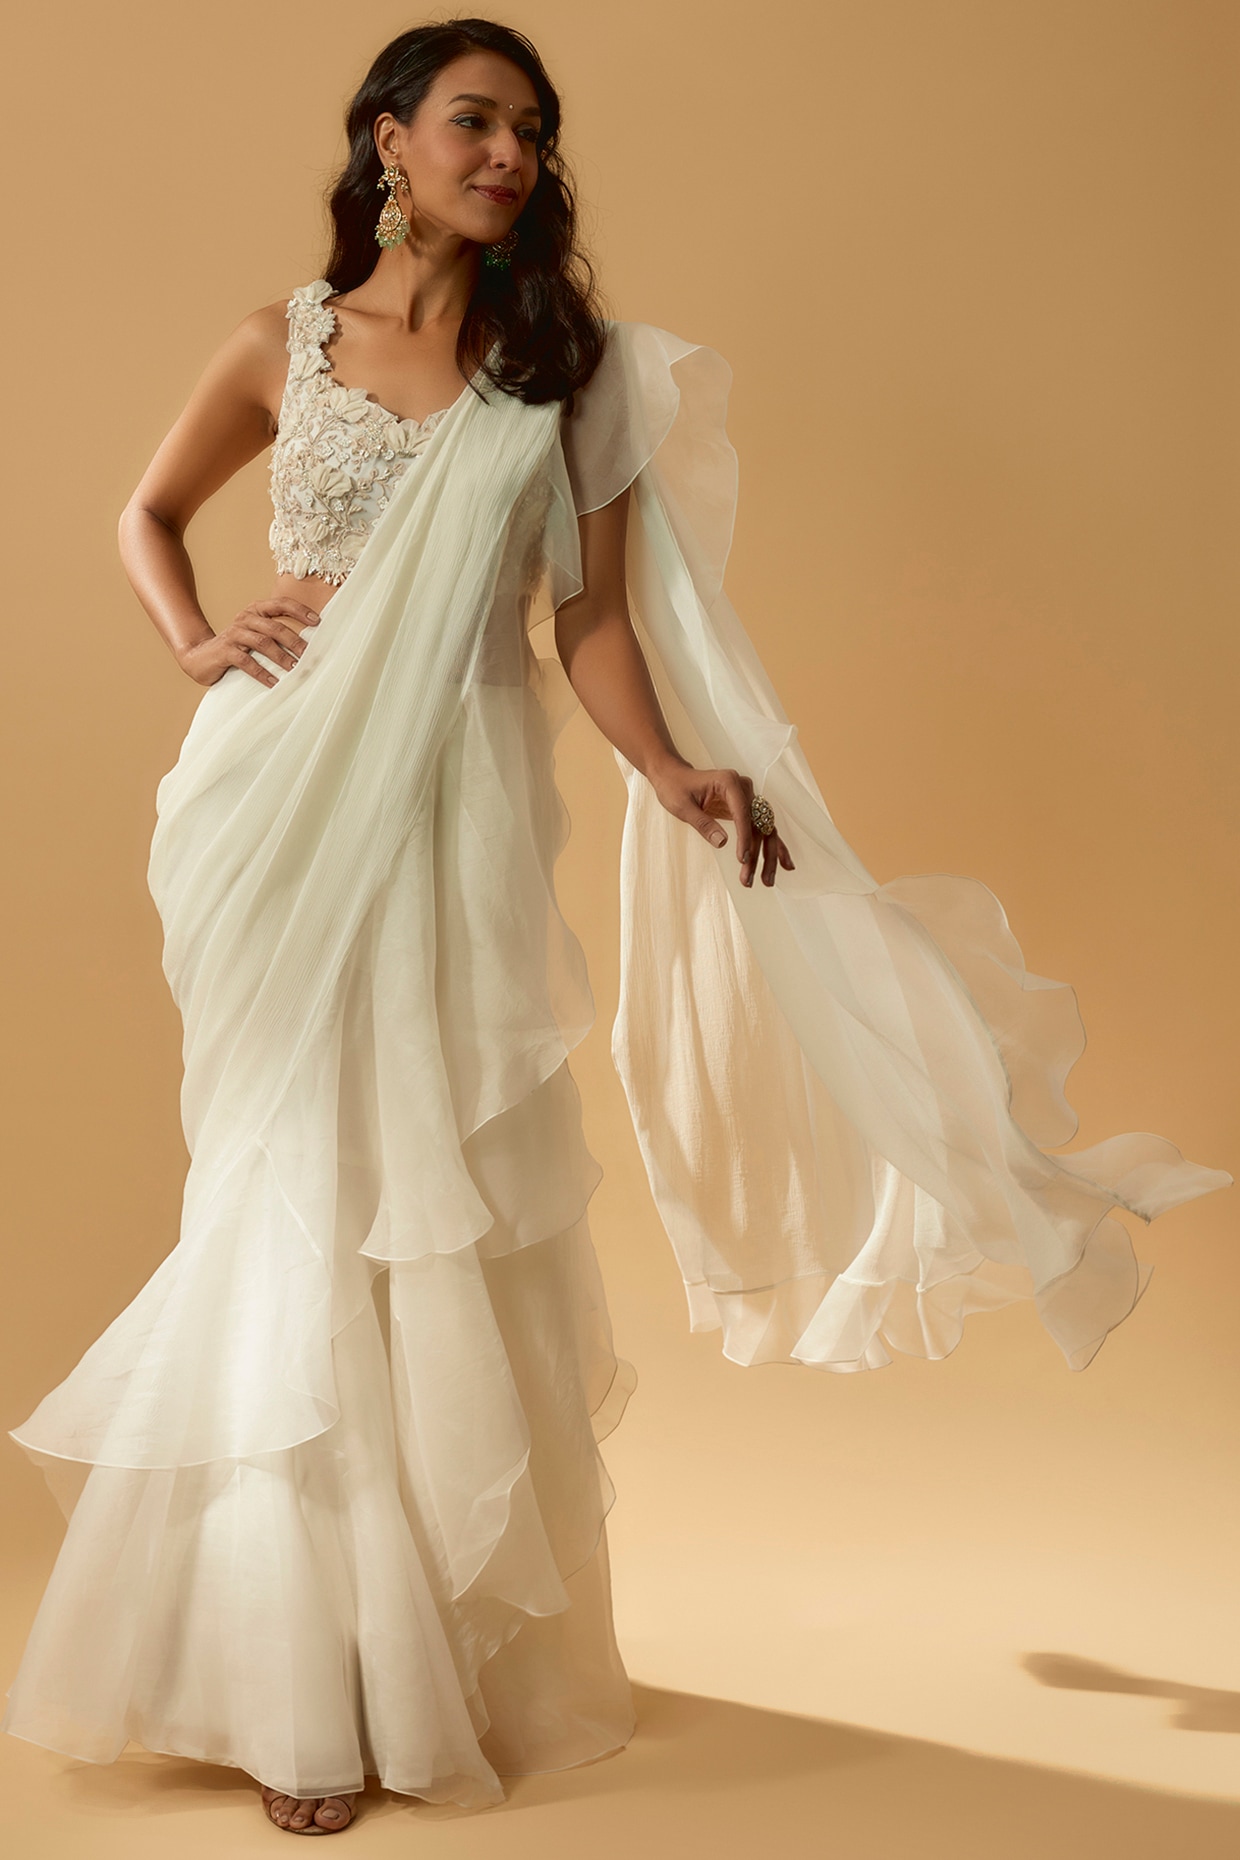 Buy REDFISH White saree Pure Chiffon simple light weight sari jari border  With jacquard Blouse Piece For Women at Amazon.in